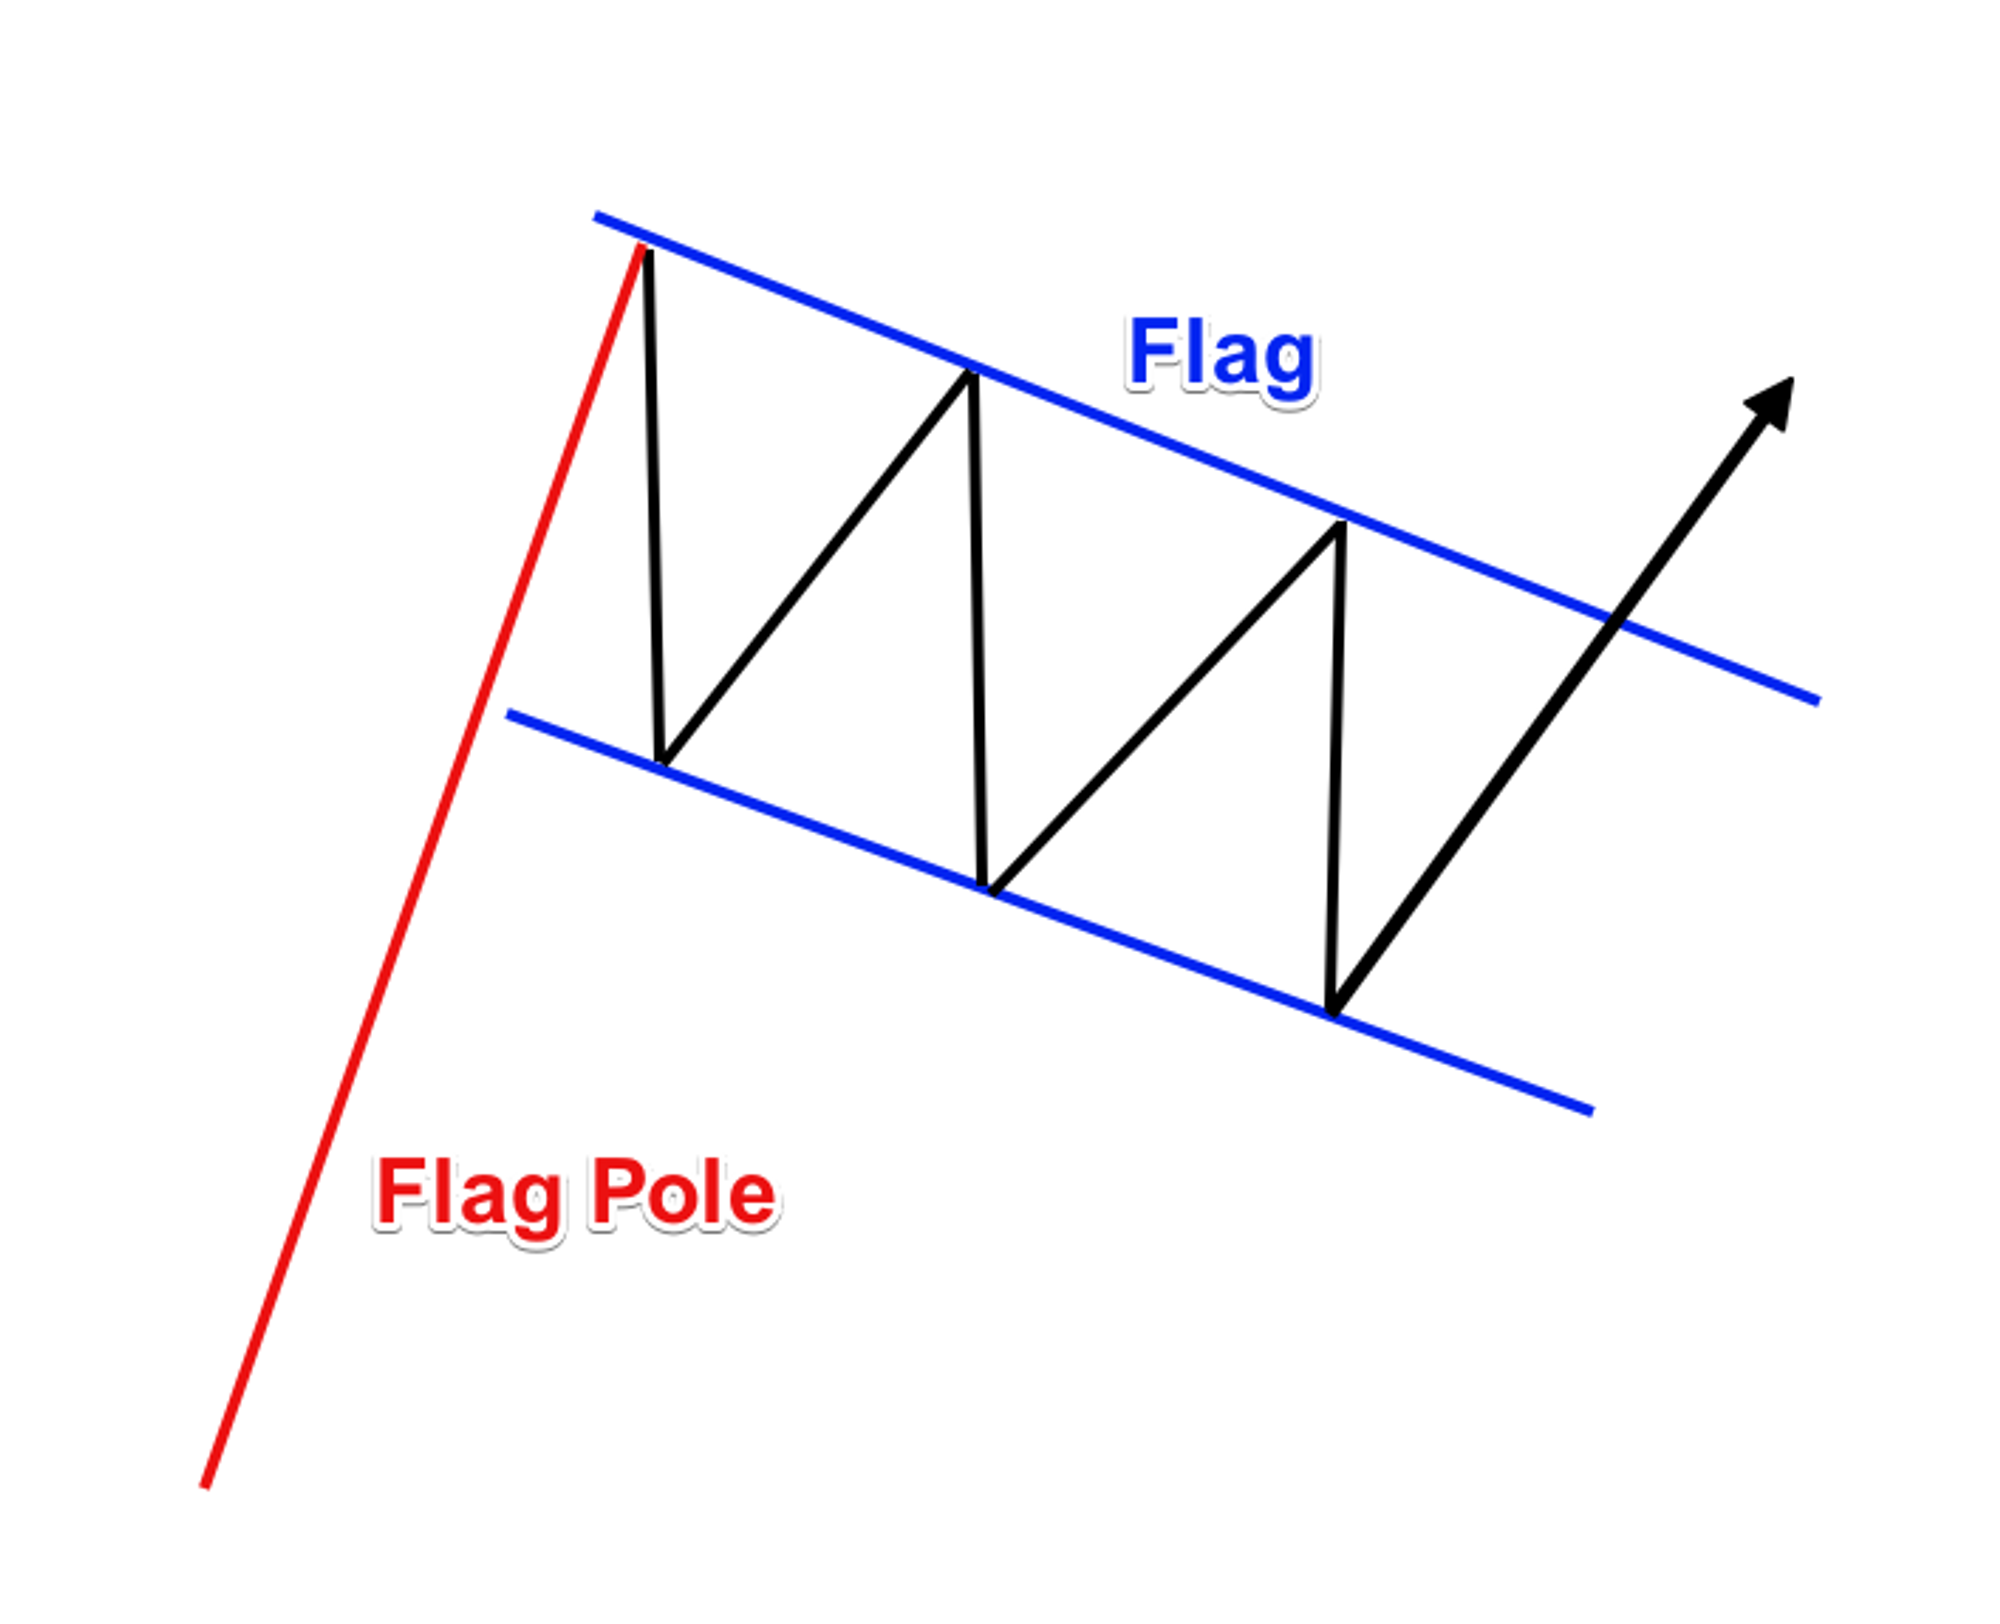 Flag pattern - diminishing trading volume